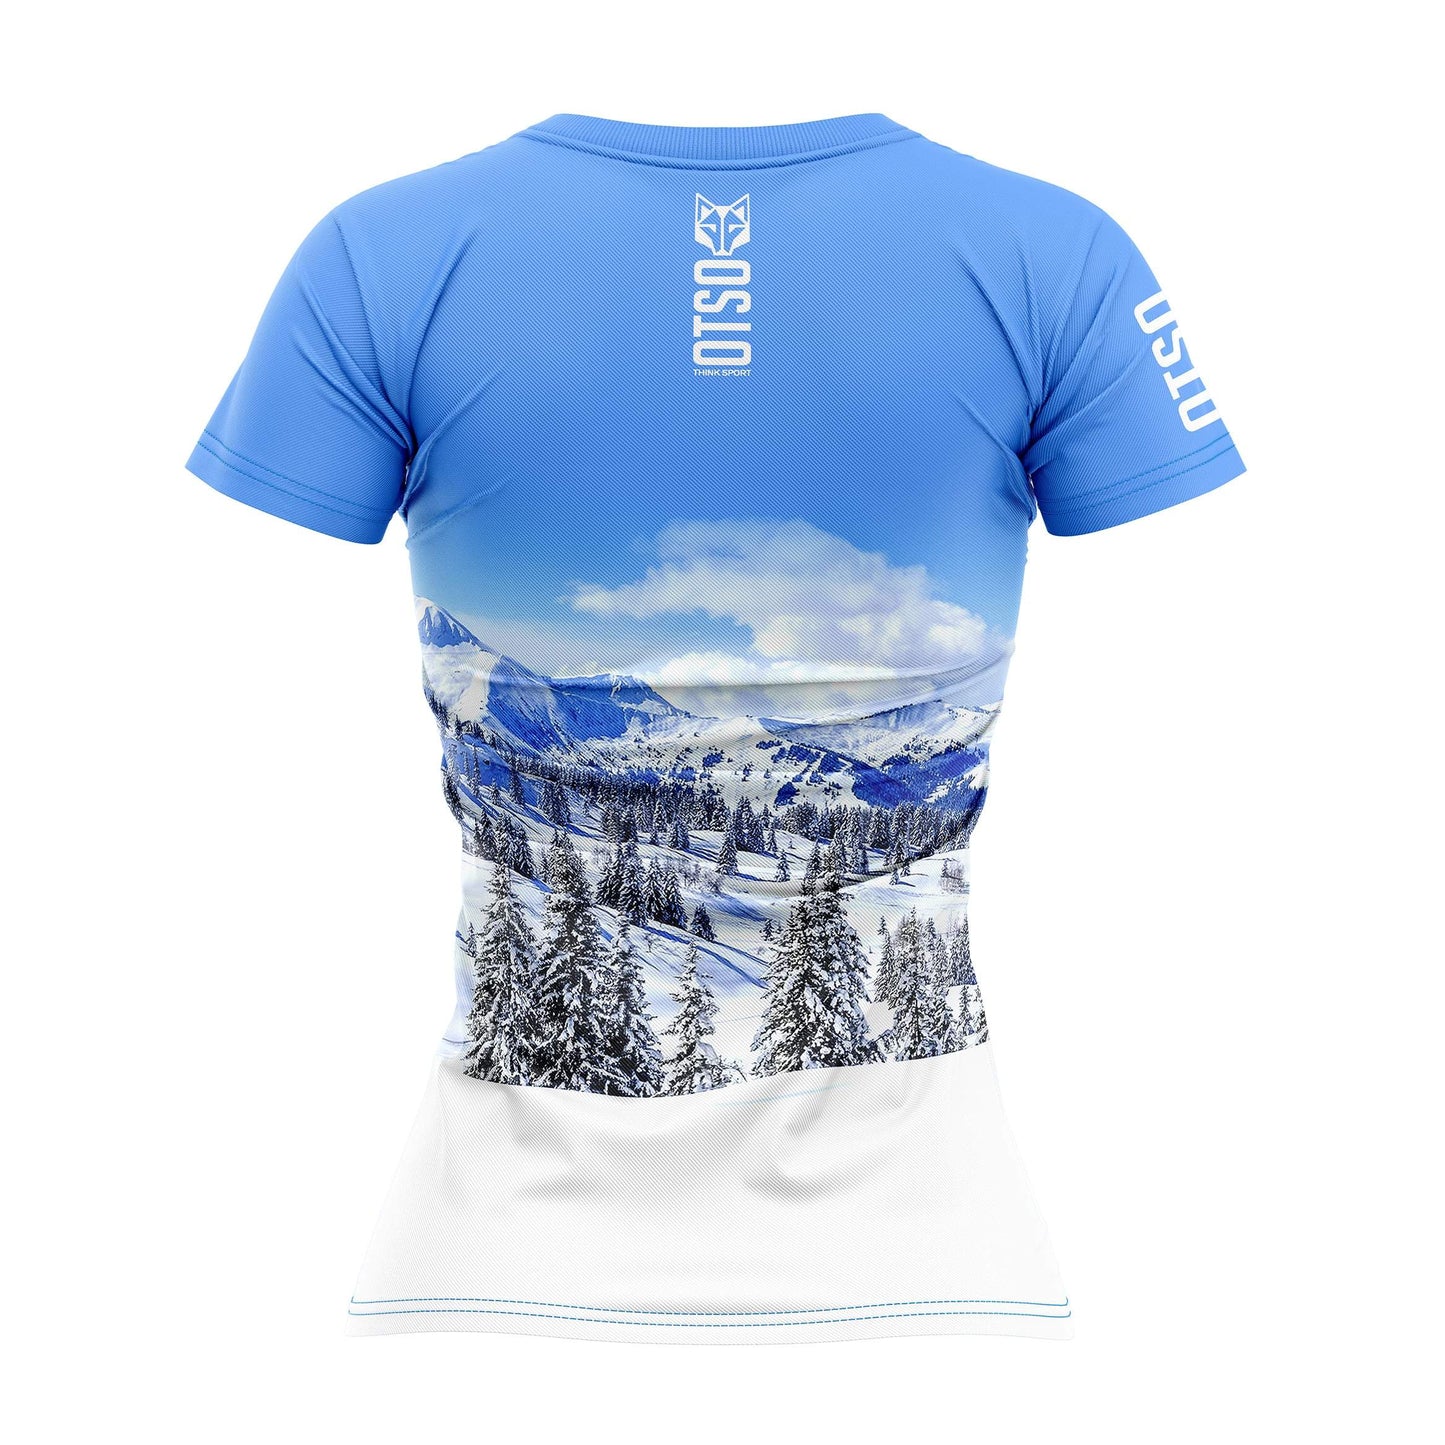 Womens T-shirt Snow Forest